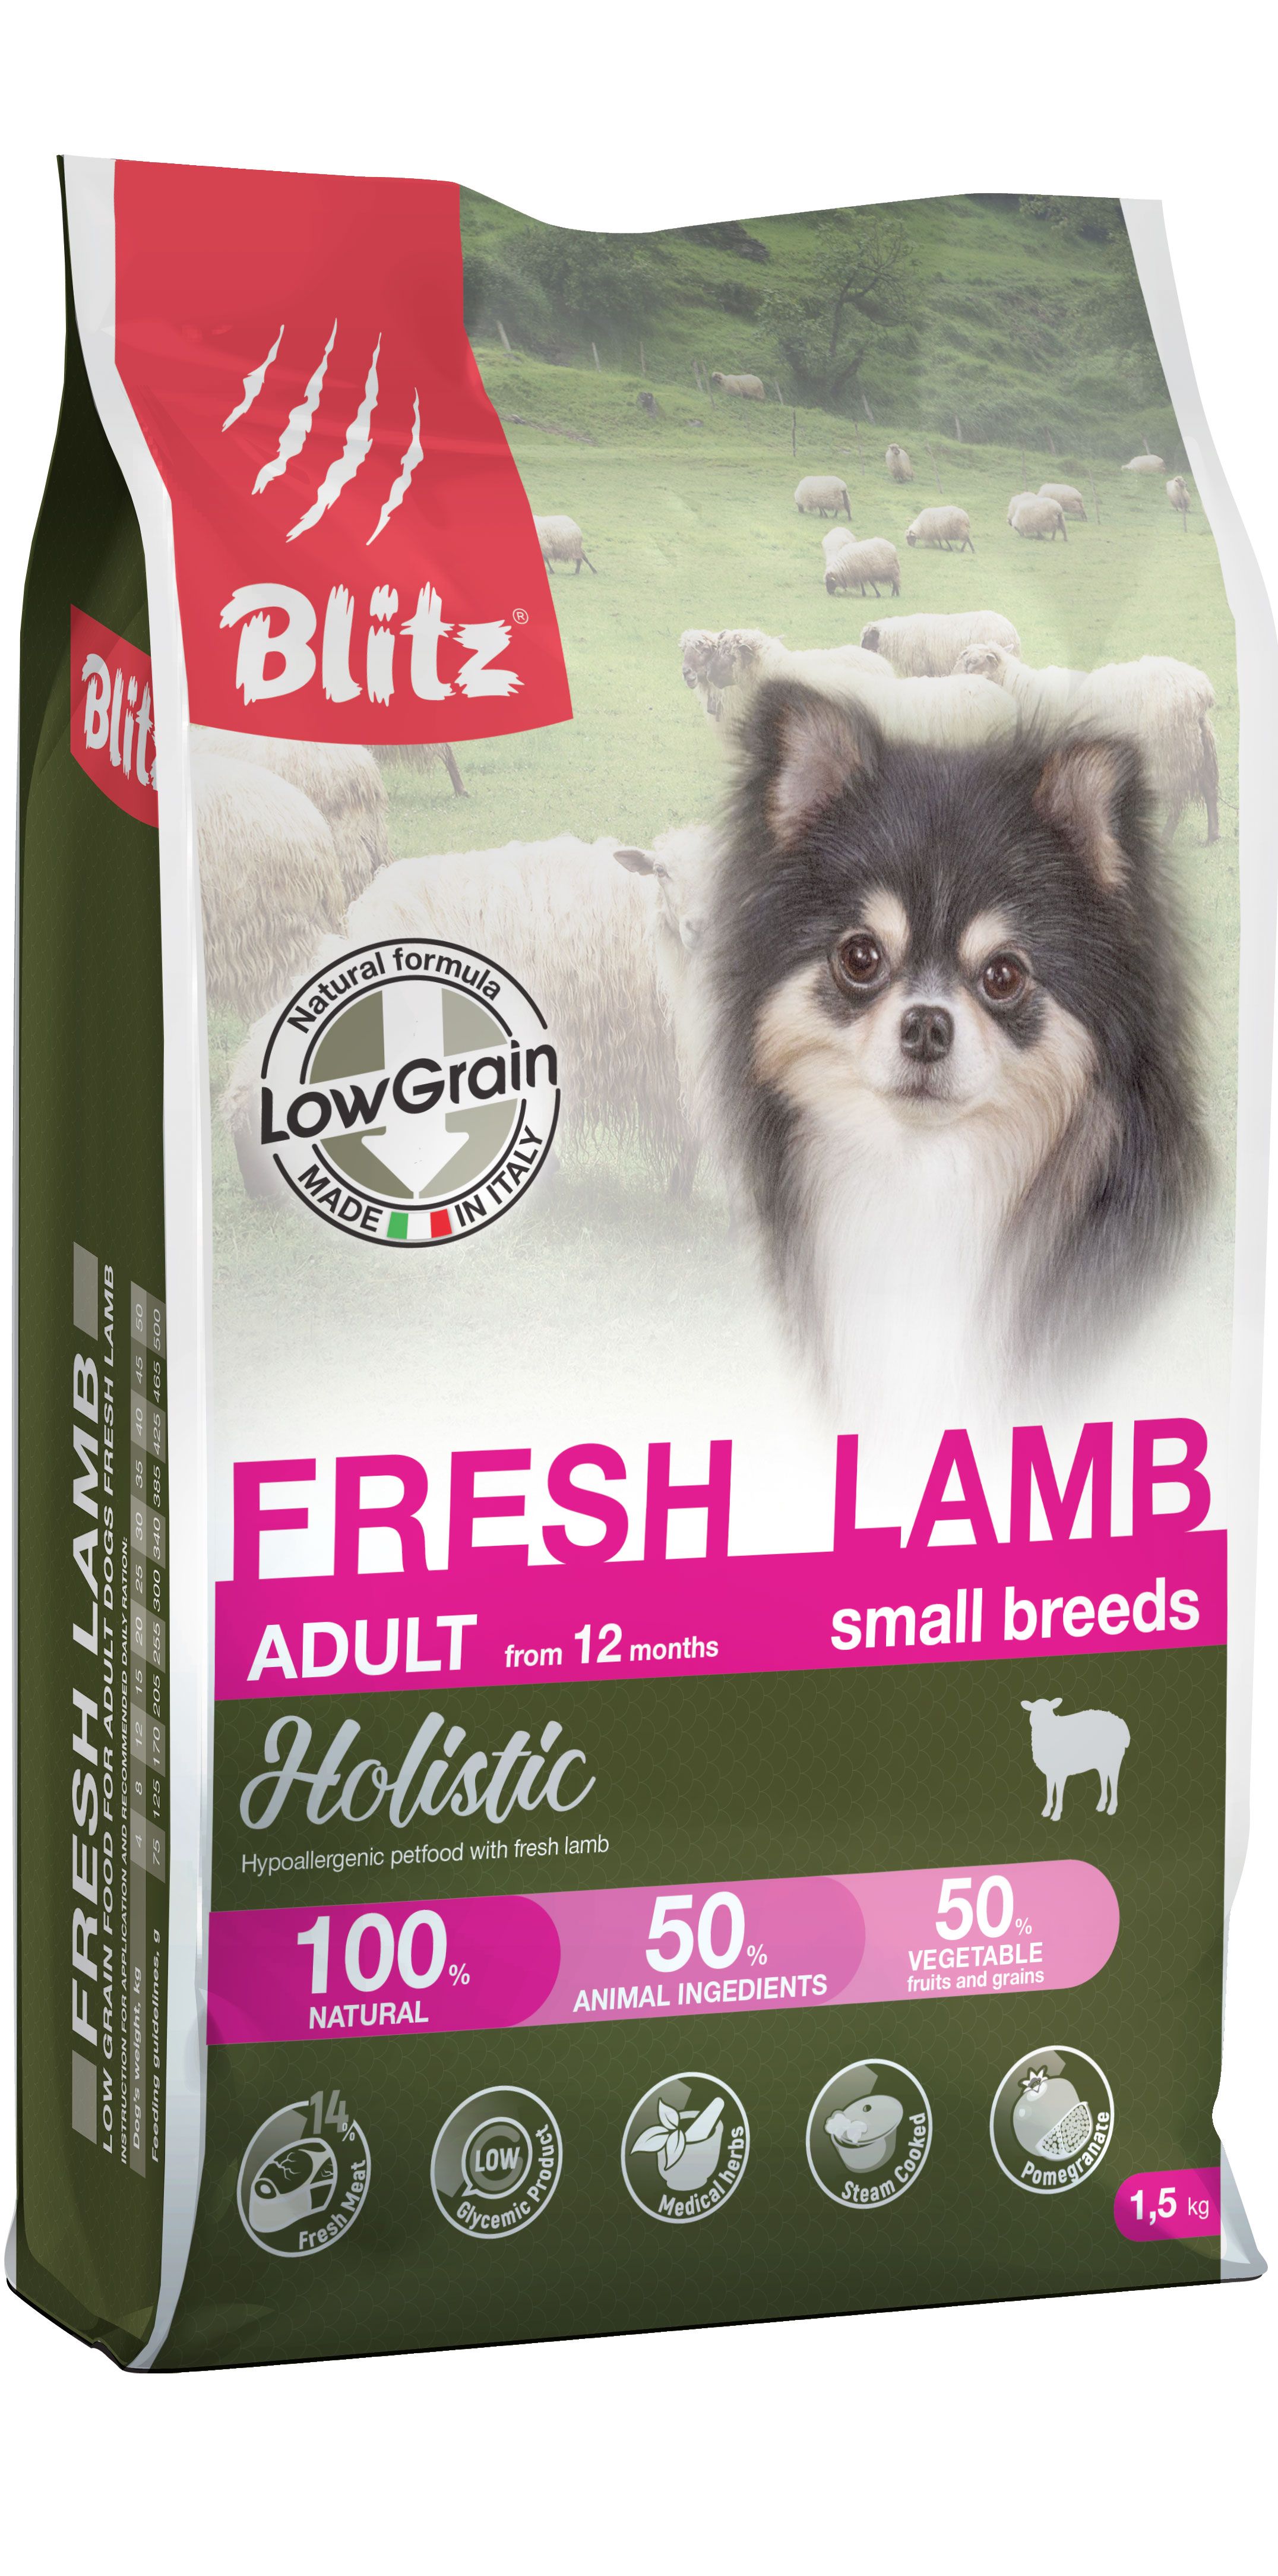 Корма блиц холистик. Blitz корм для собак Fresh Lamb Holistic низкозерновой ягненок 1.5кг. Blitz Holistic для собак ягненок. Корм блитз для собак мелких пород. Сухой корм Blitz Holistic Low-Grain Adult Fresh Lamb.